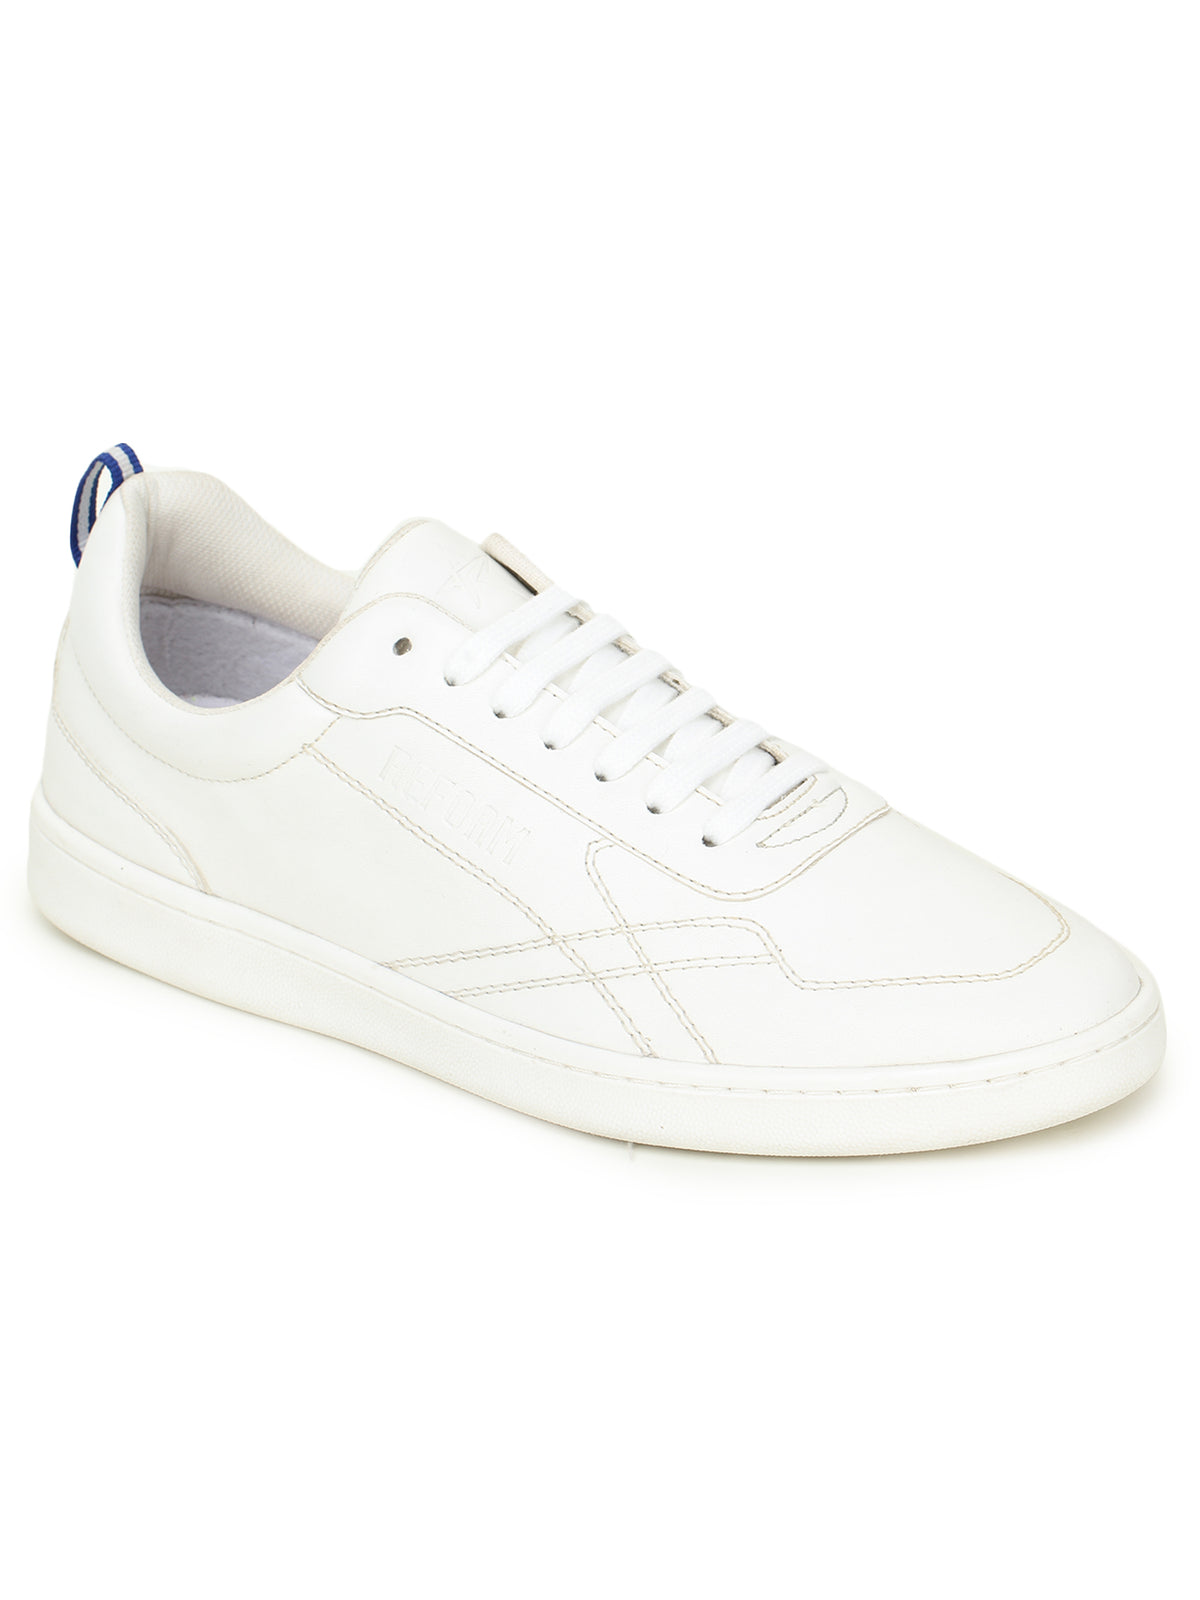 Converse Women Sneaker Shoes All Star Gray Fabric Lace Up Size 10 Medium  (B, M) | eBay